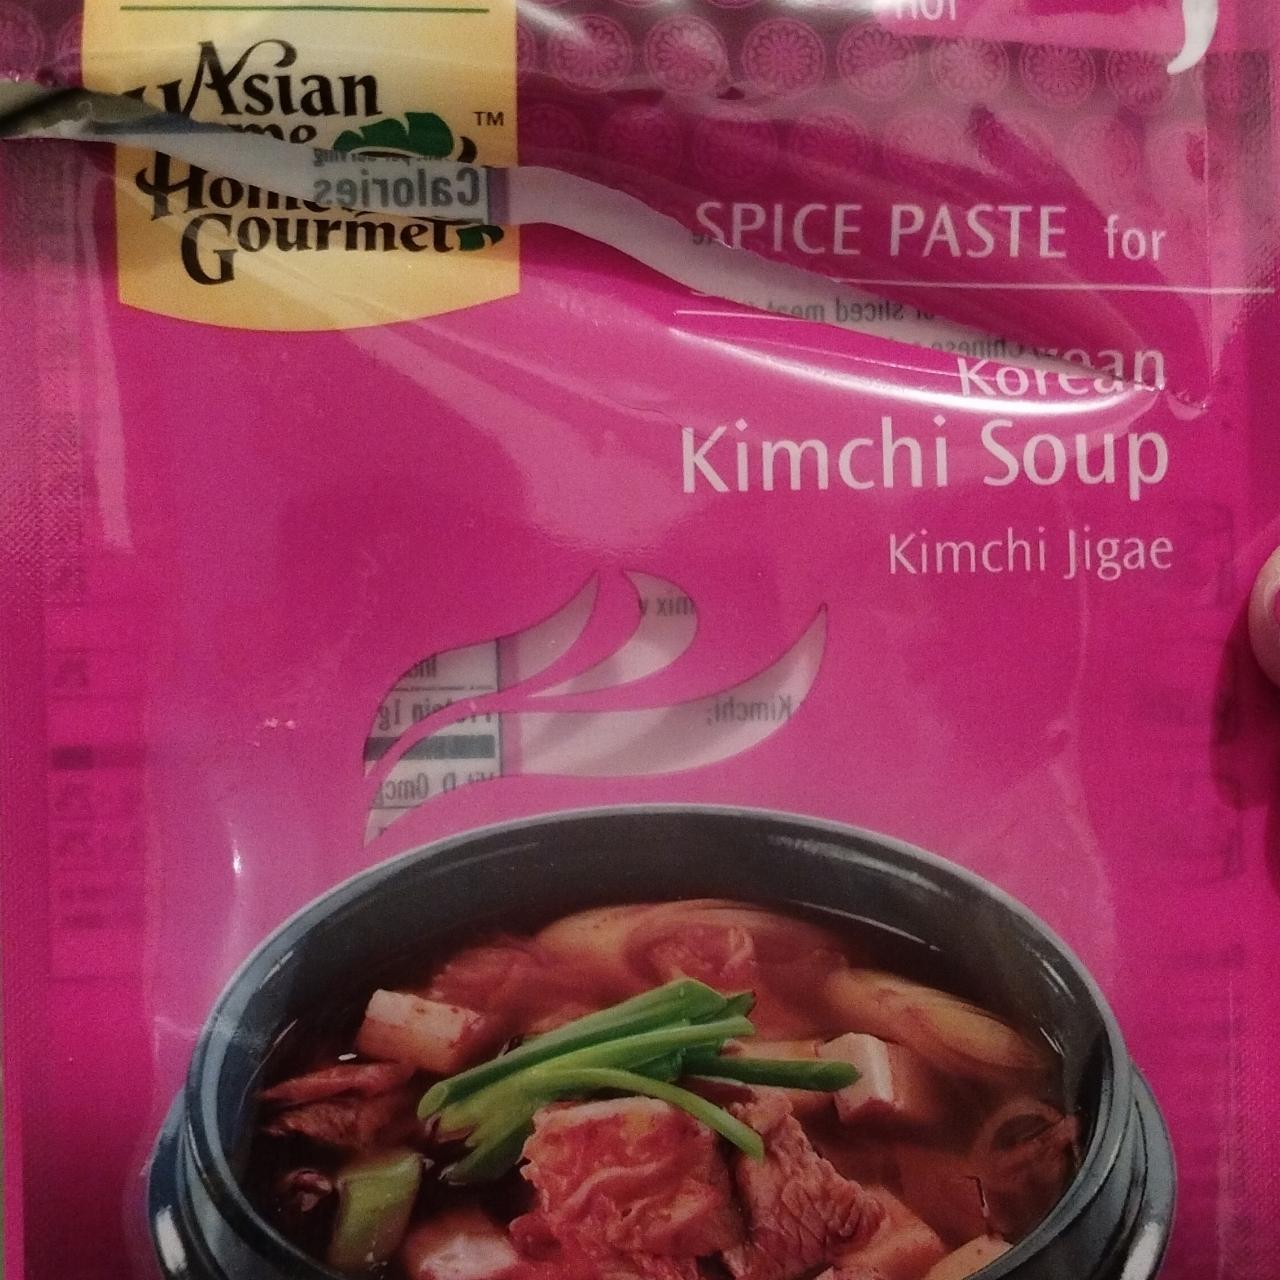 Fotografie - Spice paste for Korean kimchi soup Asian Home Gourmet